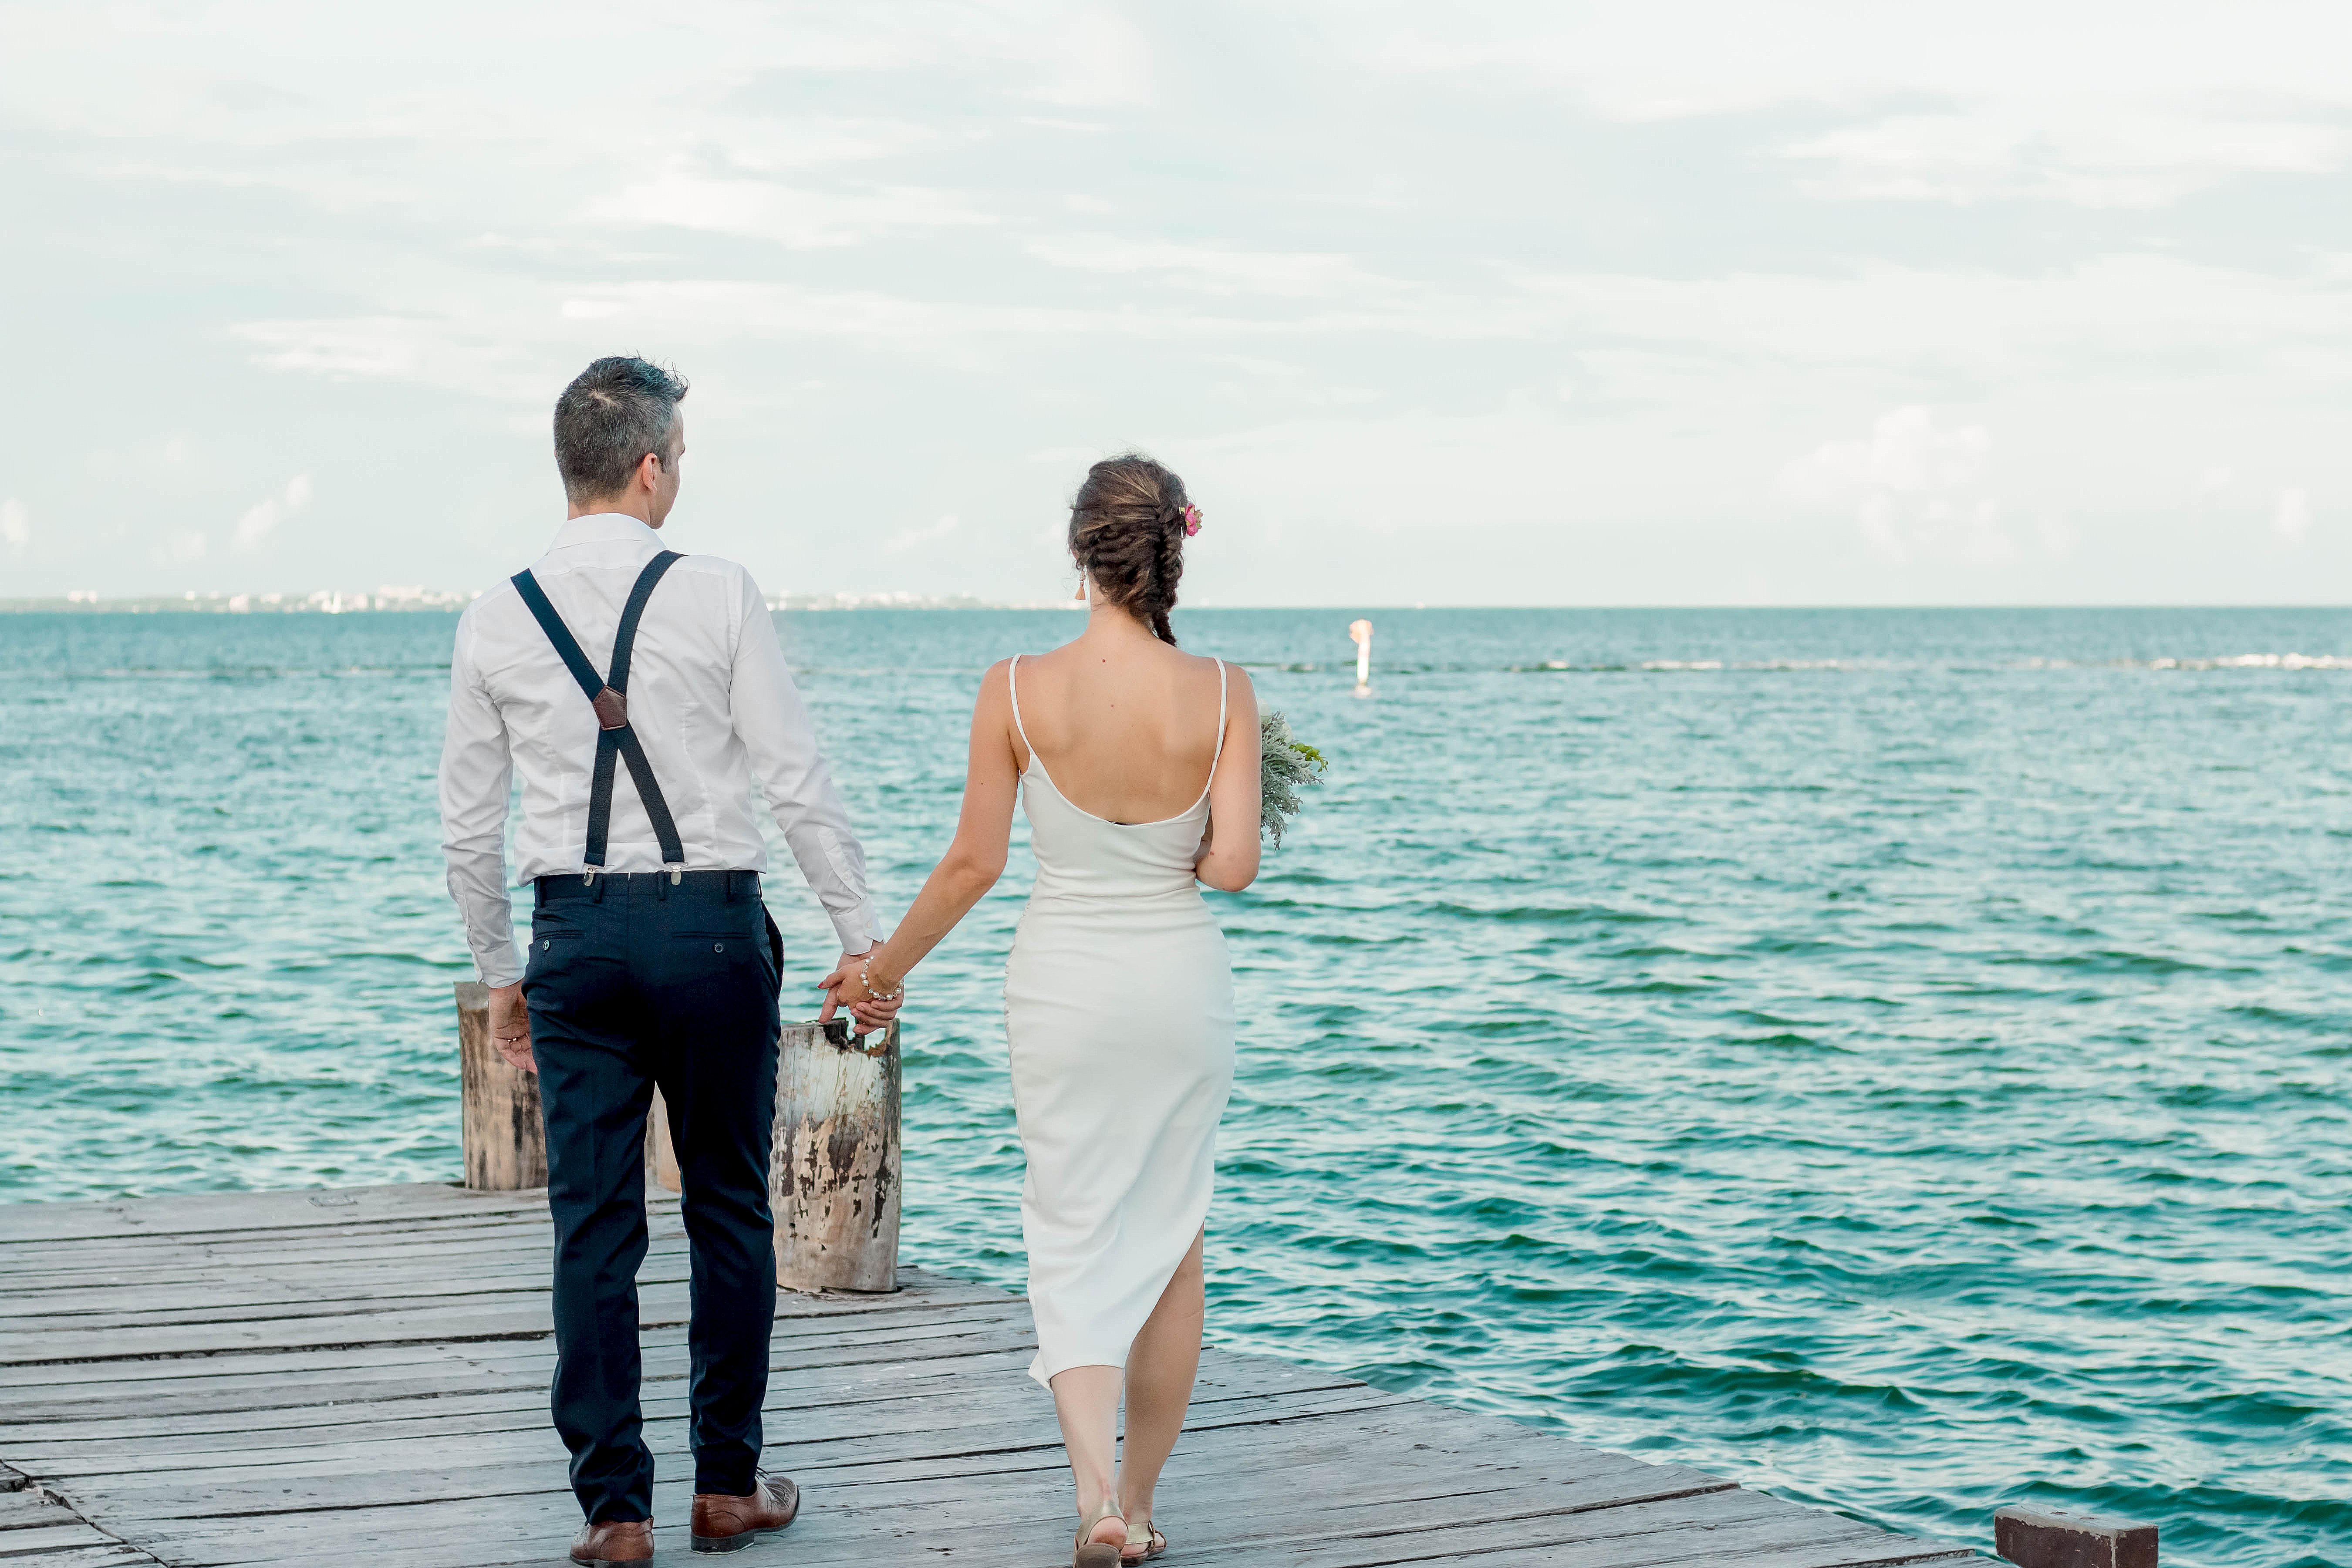 15 - Planning a wedding in Cancun - Cancun Sailing best weddings venues